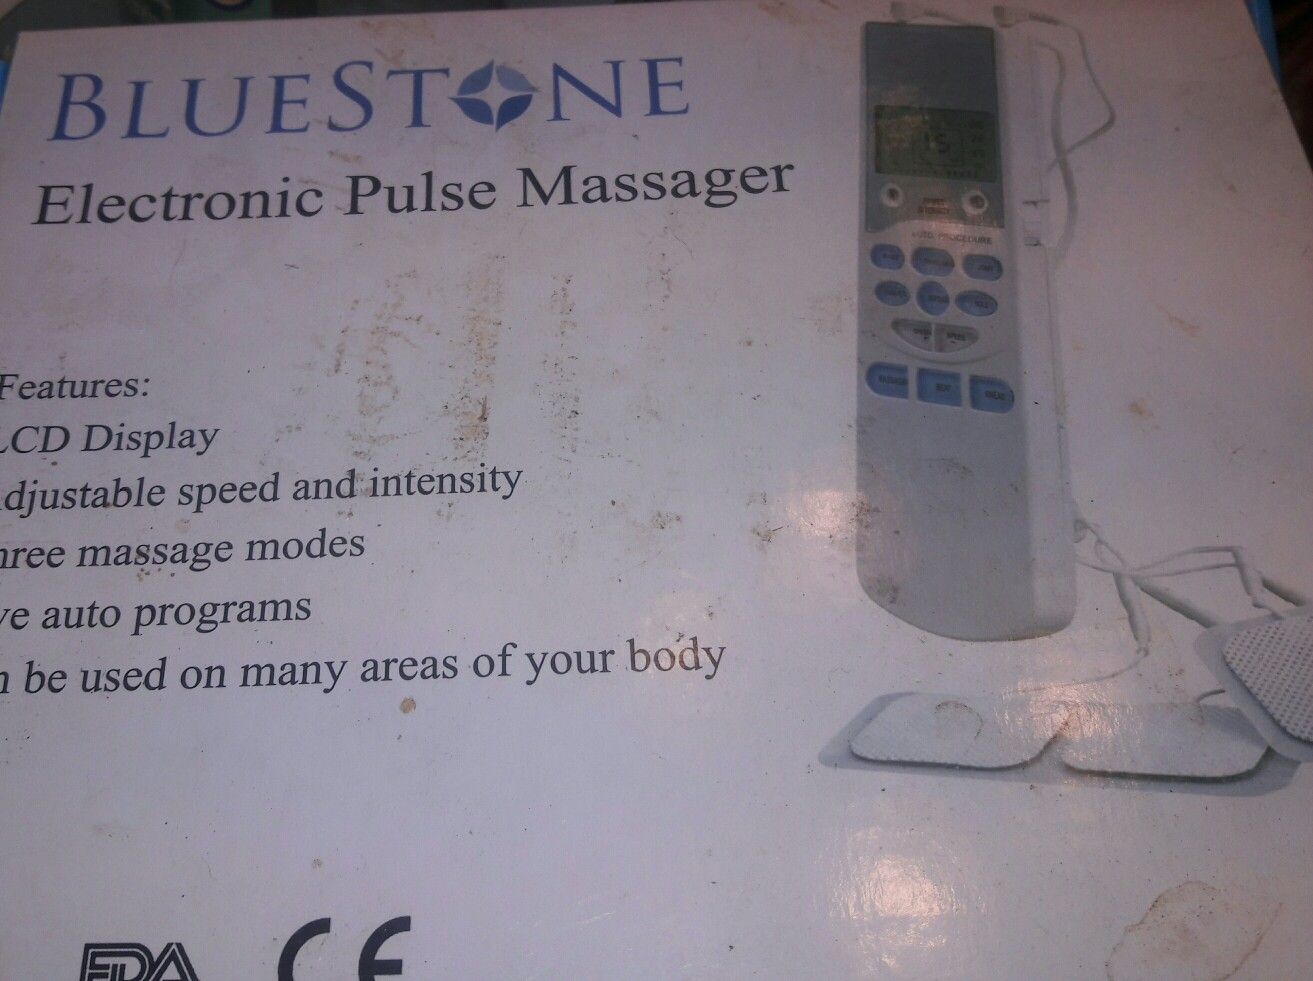 Bluestone electric pulse manager